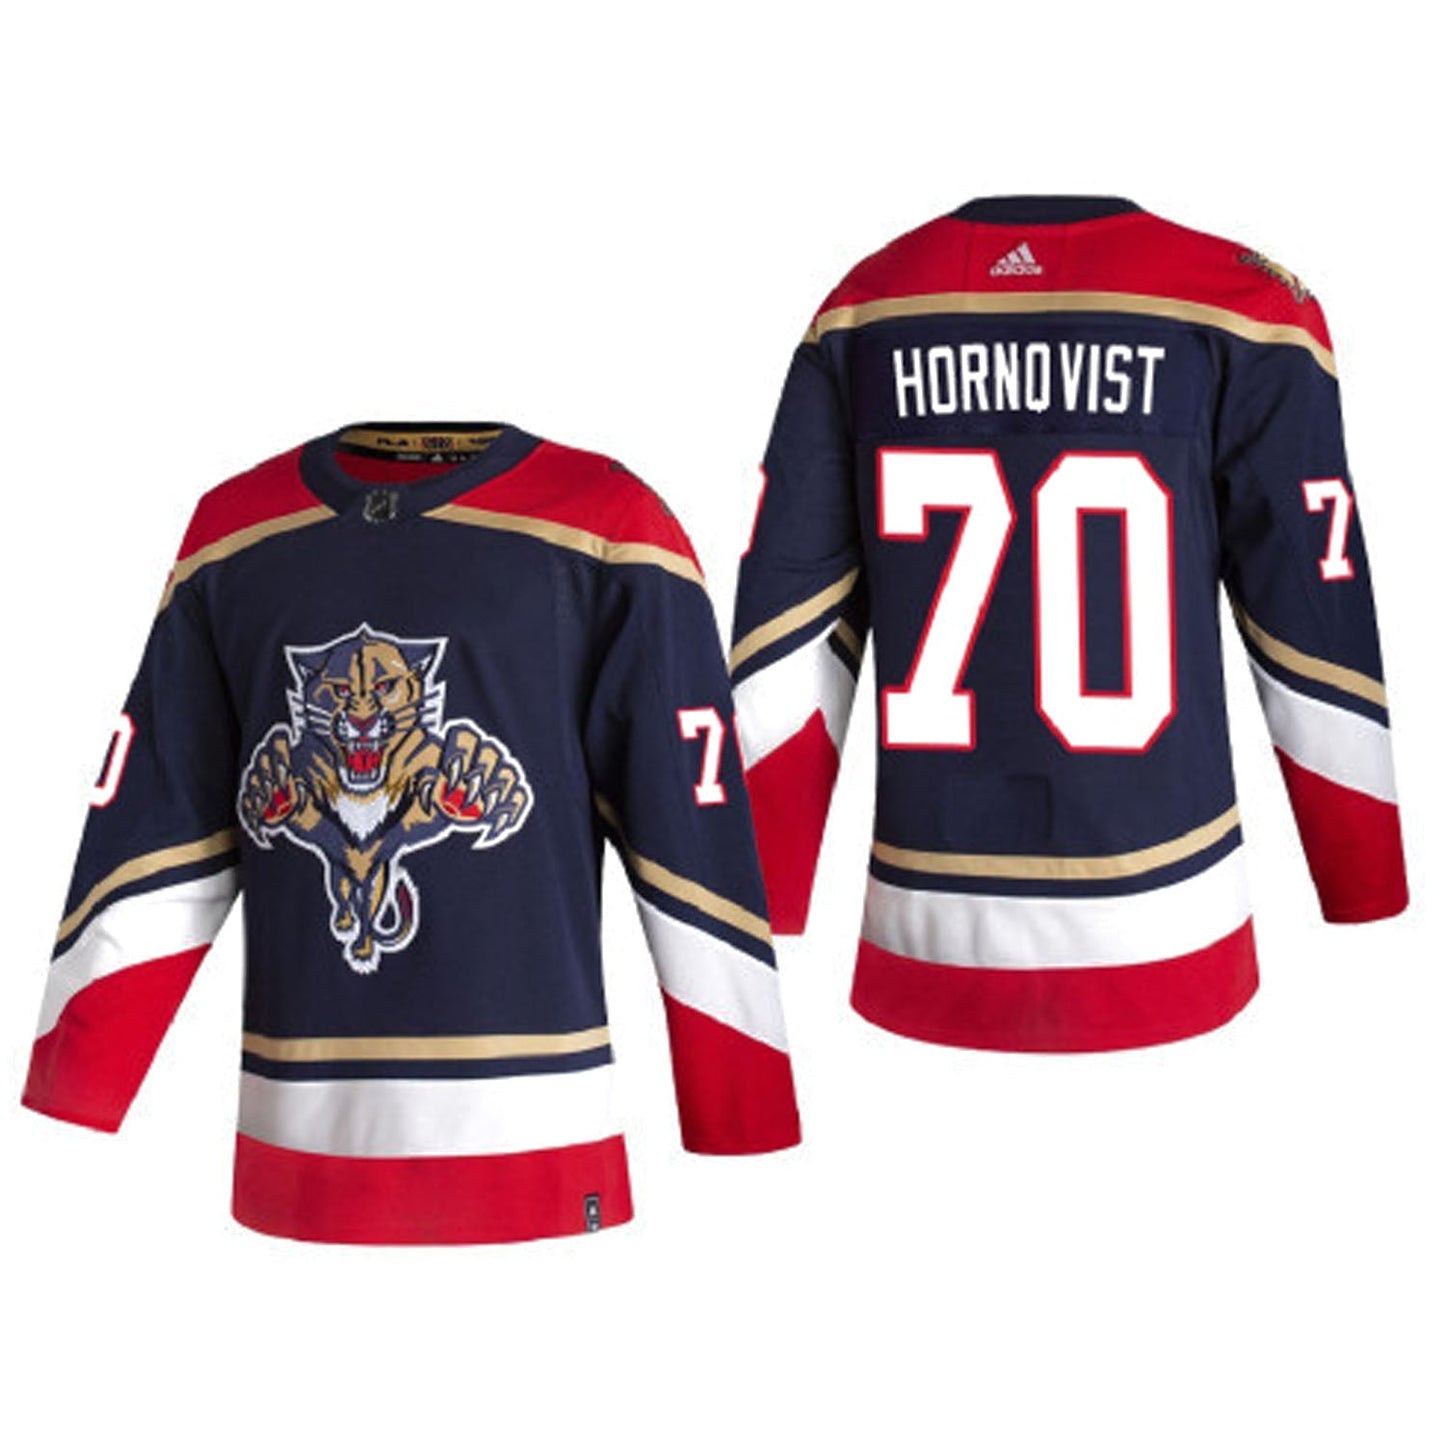 NHL Patric Hornqvist Florida Panthers 70 Jersey